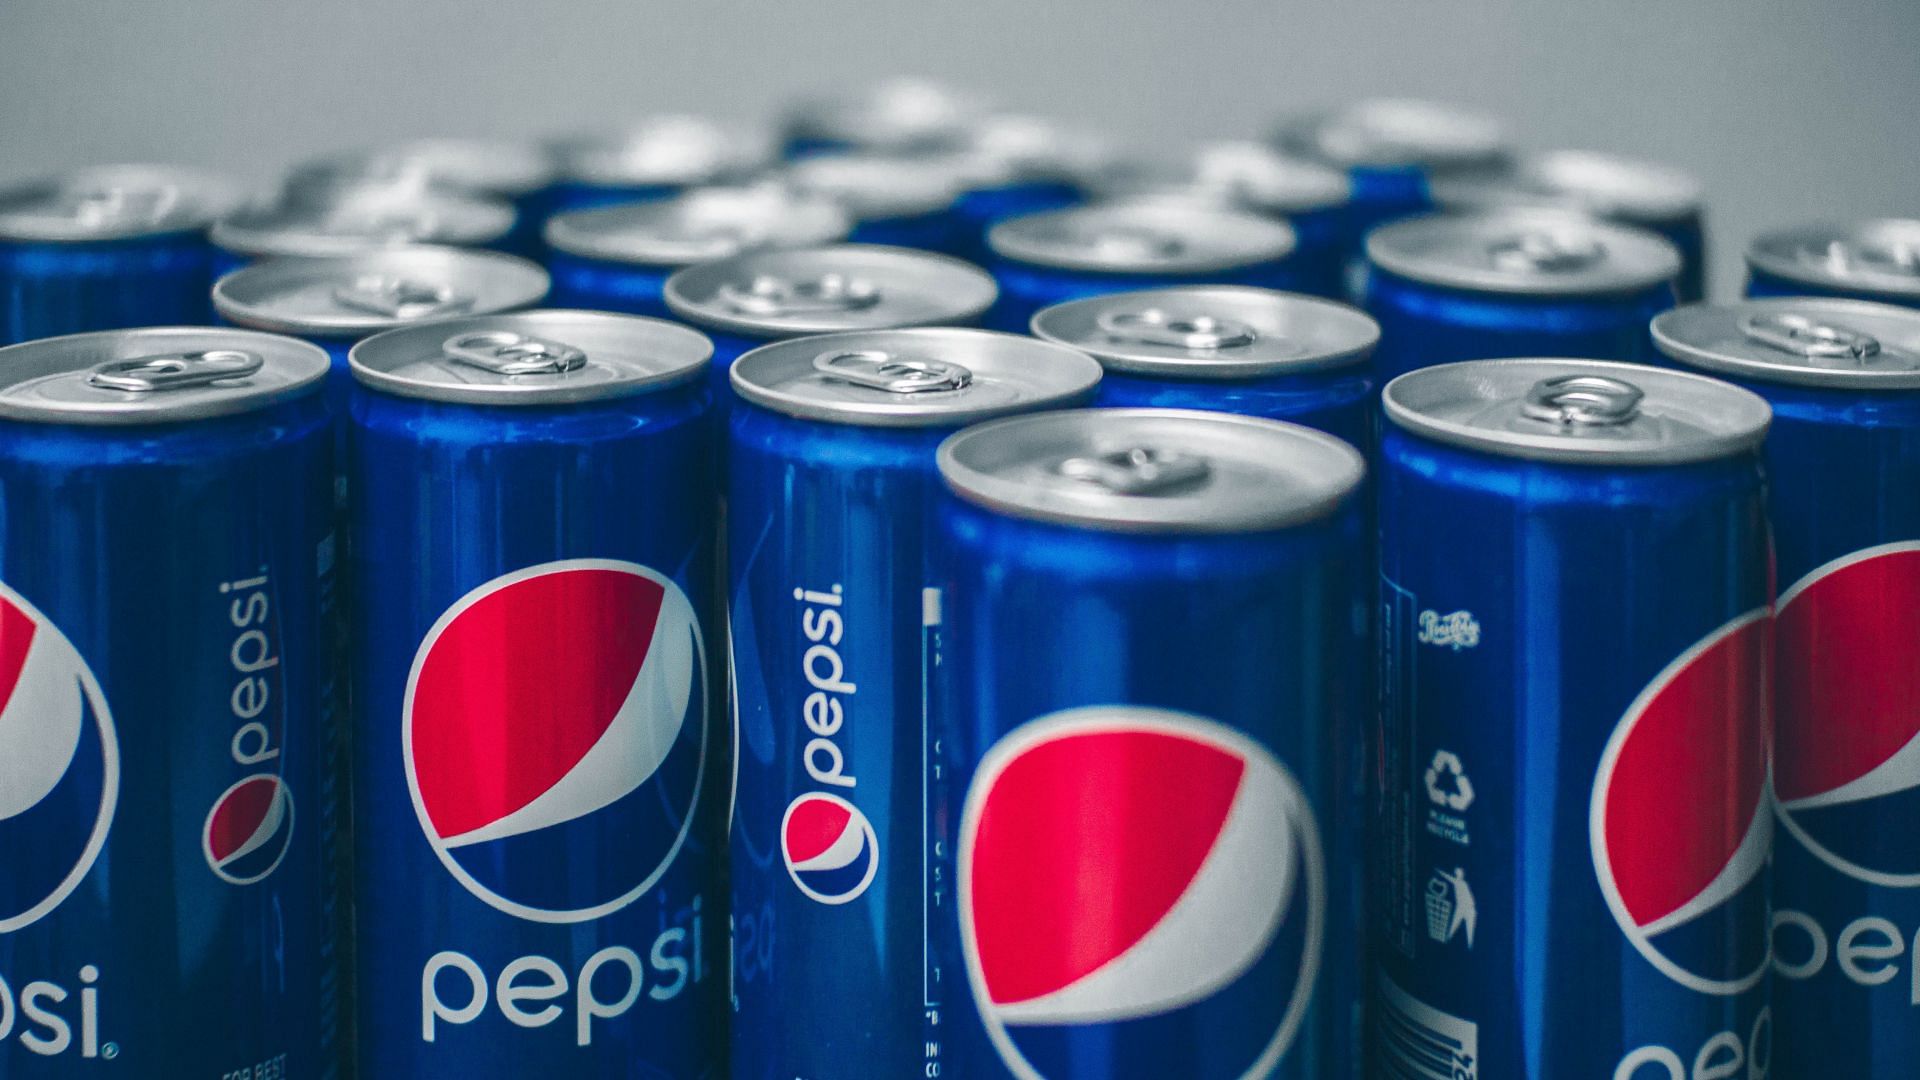 Pepsi also contains caffeine. (Image via Unsplash/Ja San Miguel)